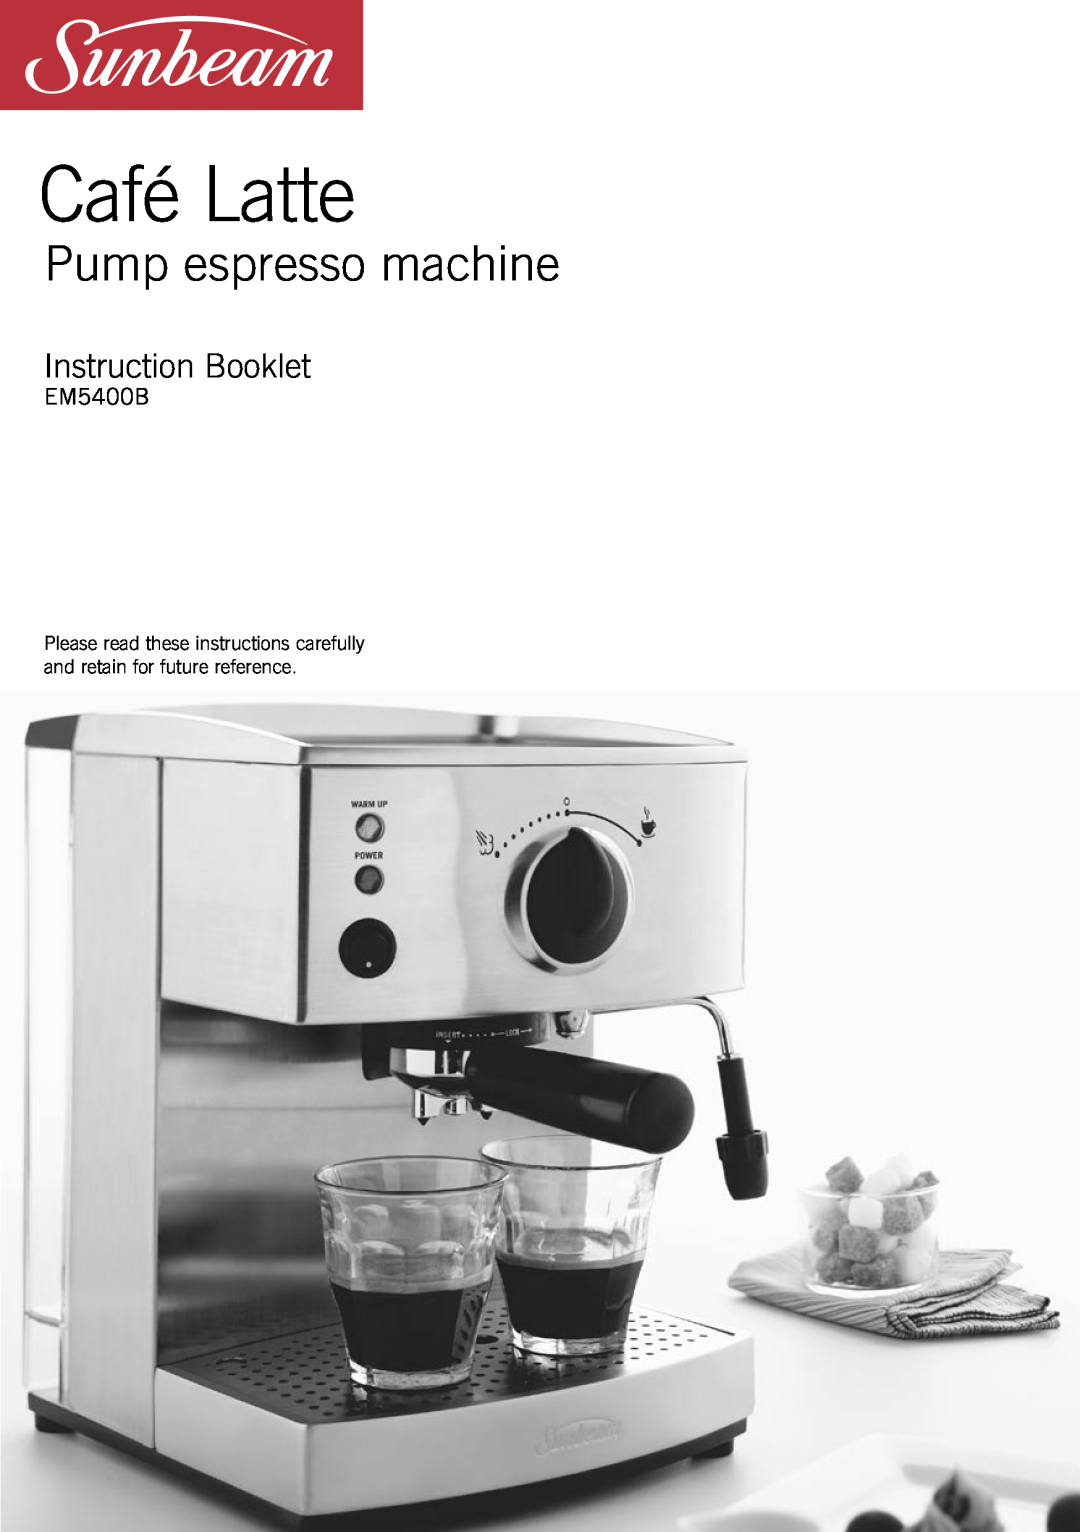 Sunbeam EM5400B manual Café Latte, Pump espresso machine, Instruction Booklet 